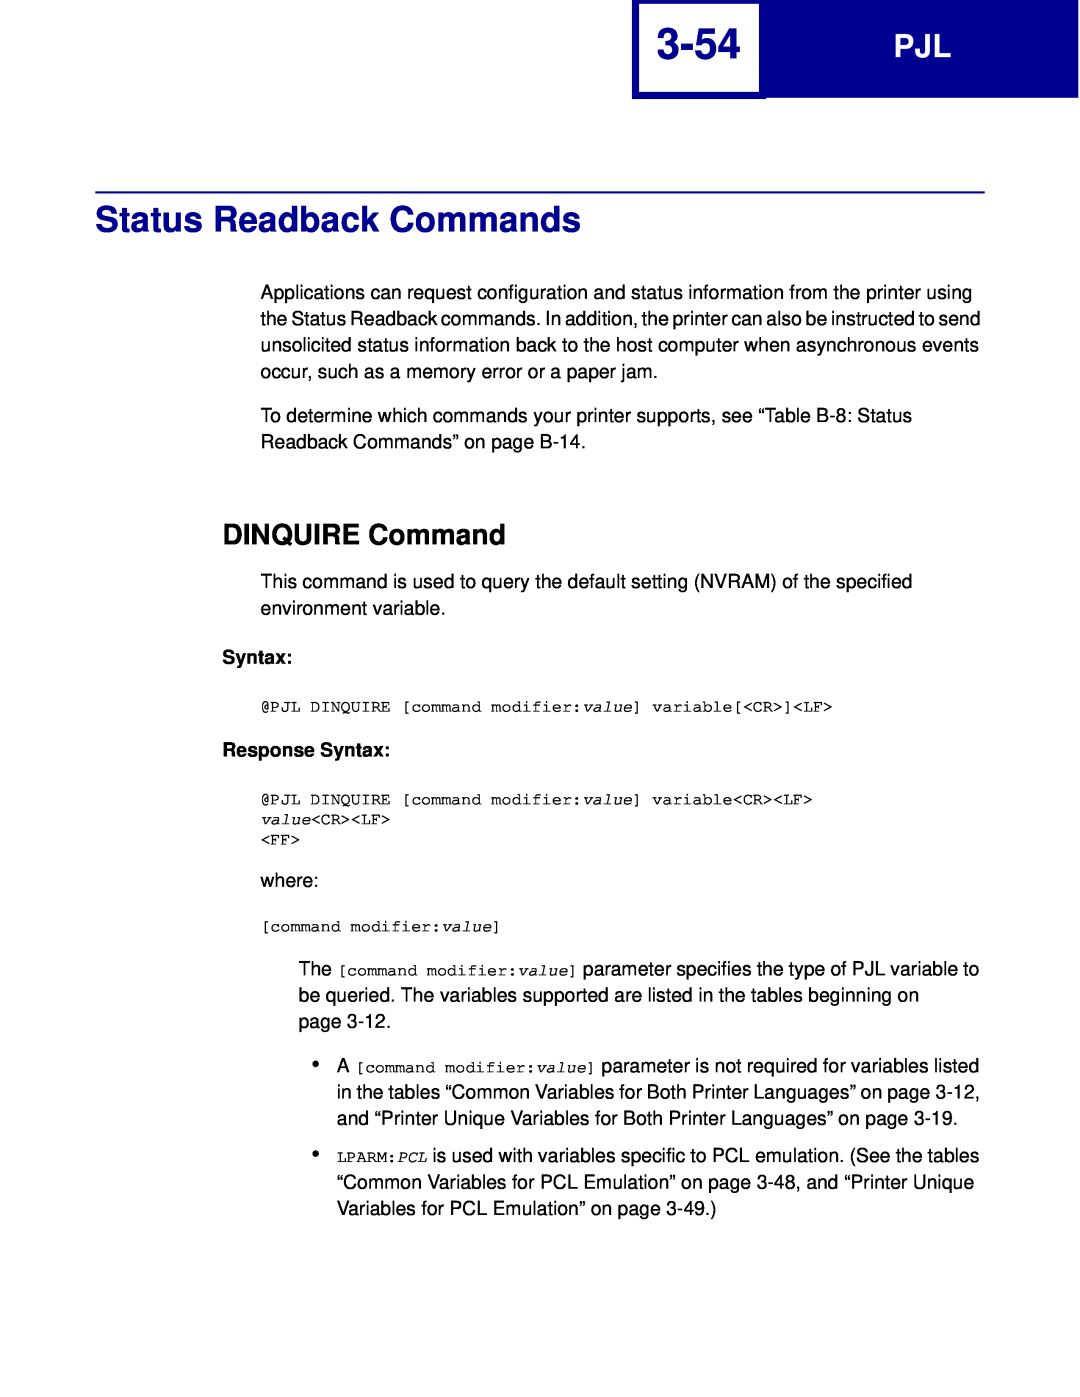 Lexmark C762, C760 manual 3-54, Status Readback Commands, DINQUIRE Command, Response Syntax 